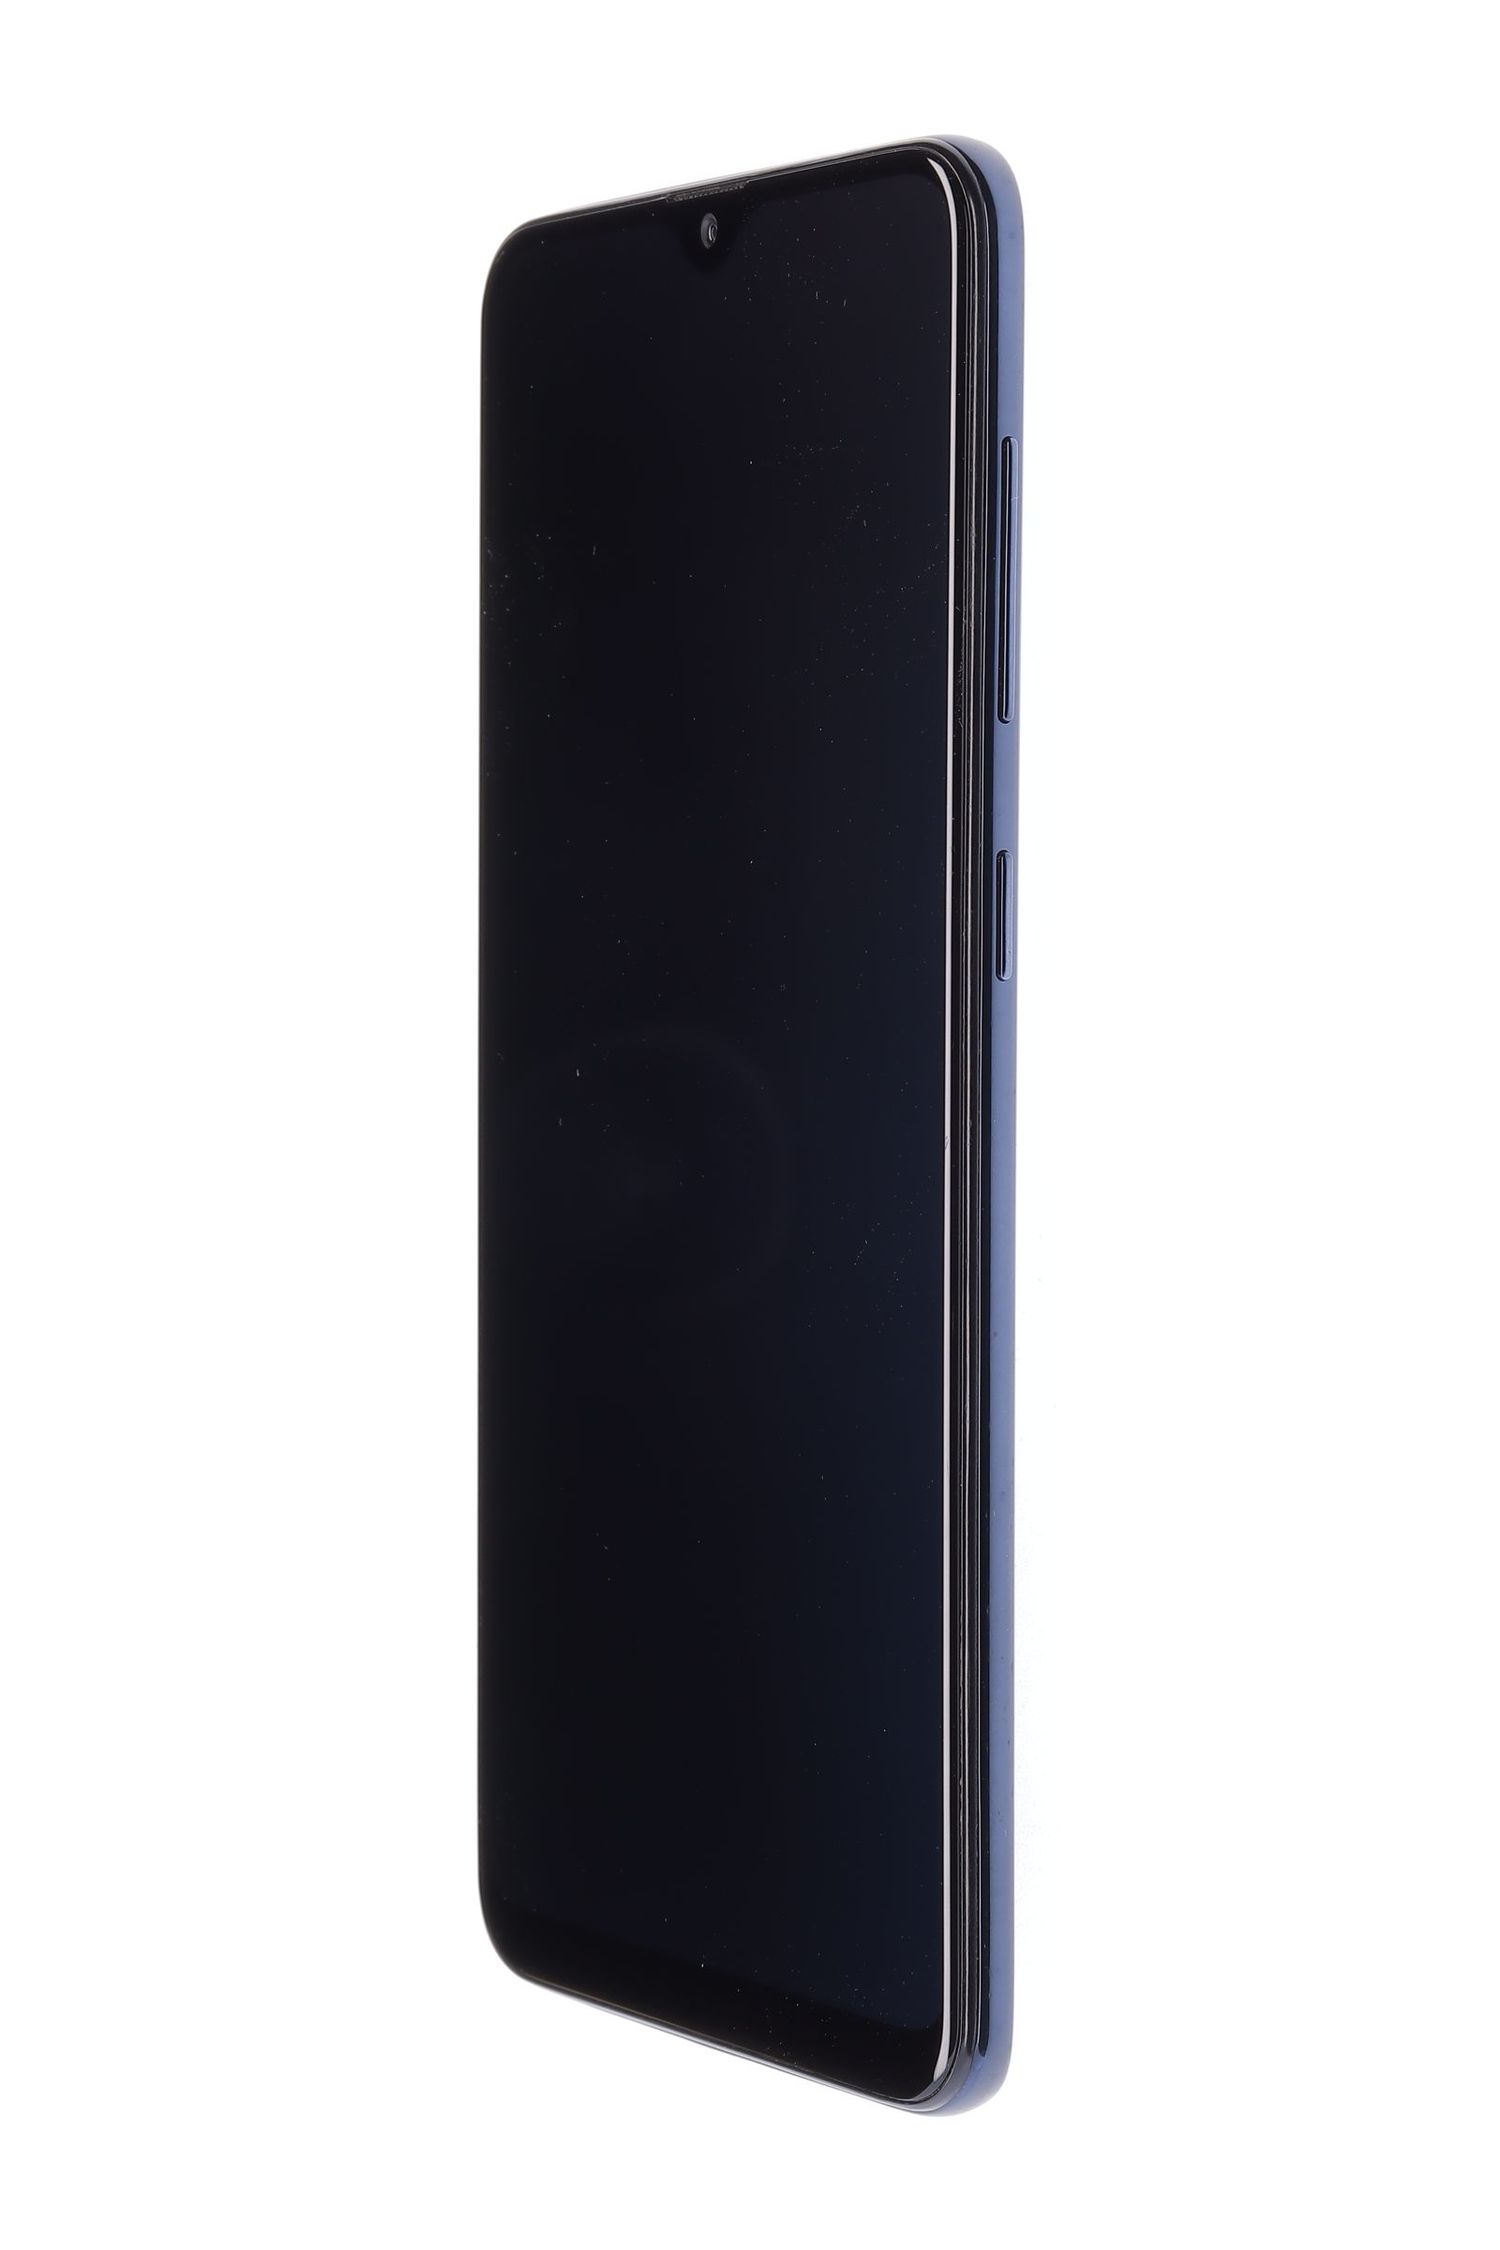 Telefon mobil Samsung Galaxy A30S Dual Sim, Black, 64 GB, Foarte Bun